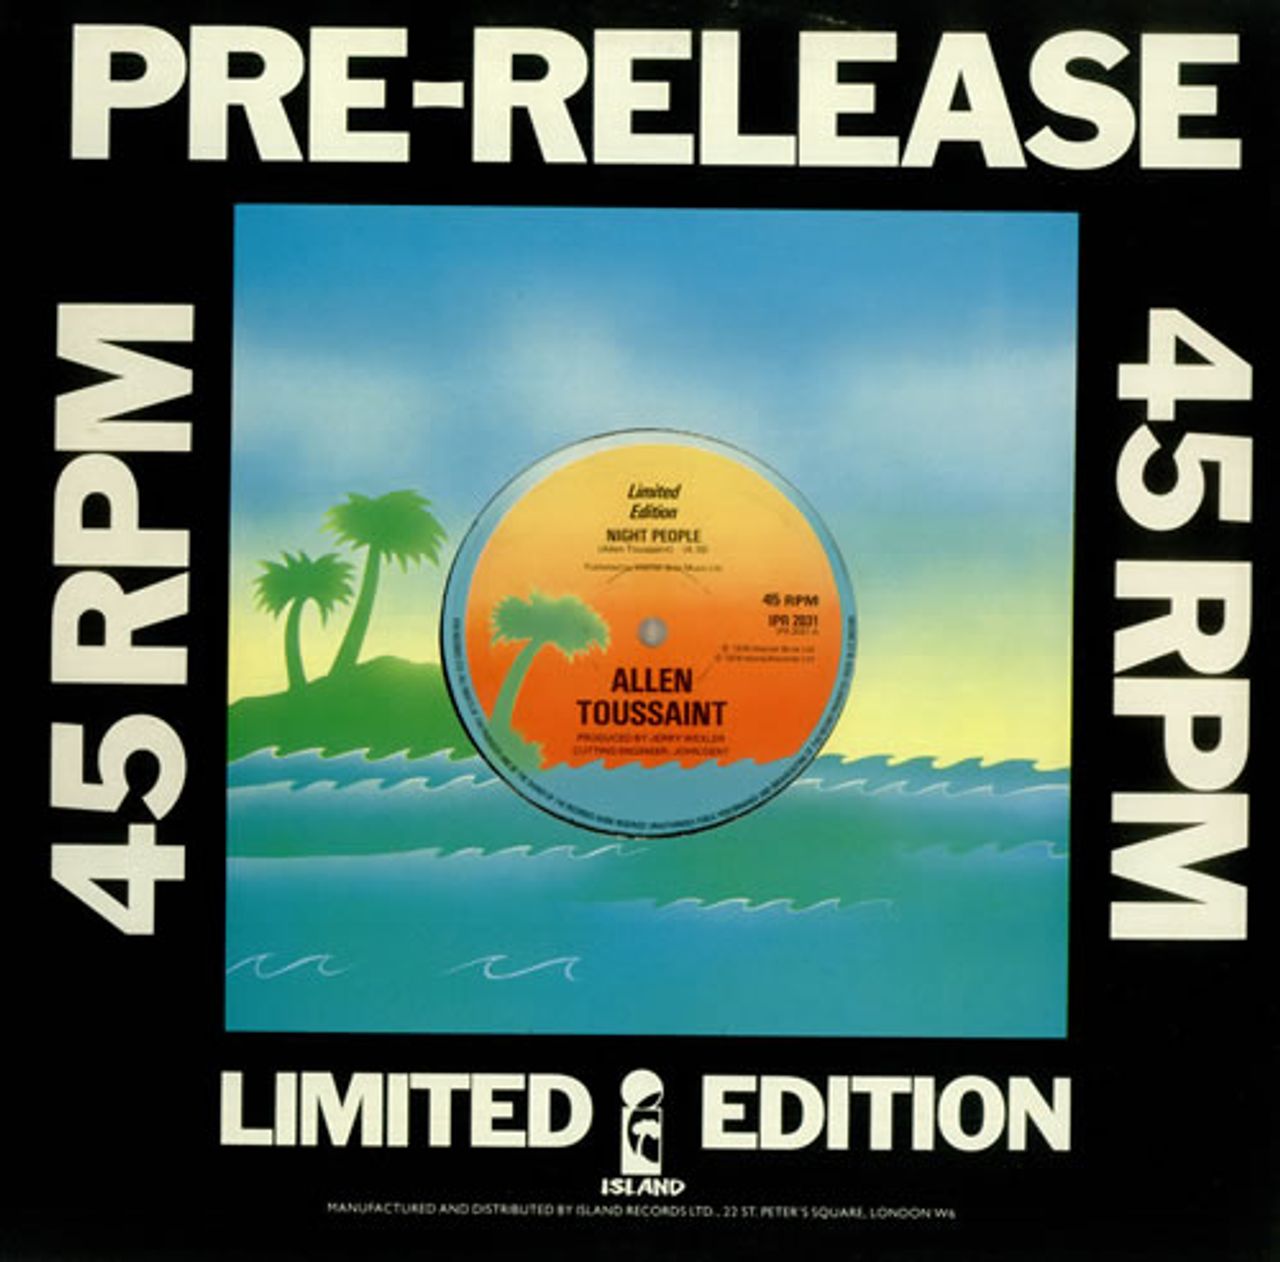 Allen Toussaint Night People UK 12" vinyl single (12 inch record / Maxi-single) IPR2031